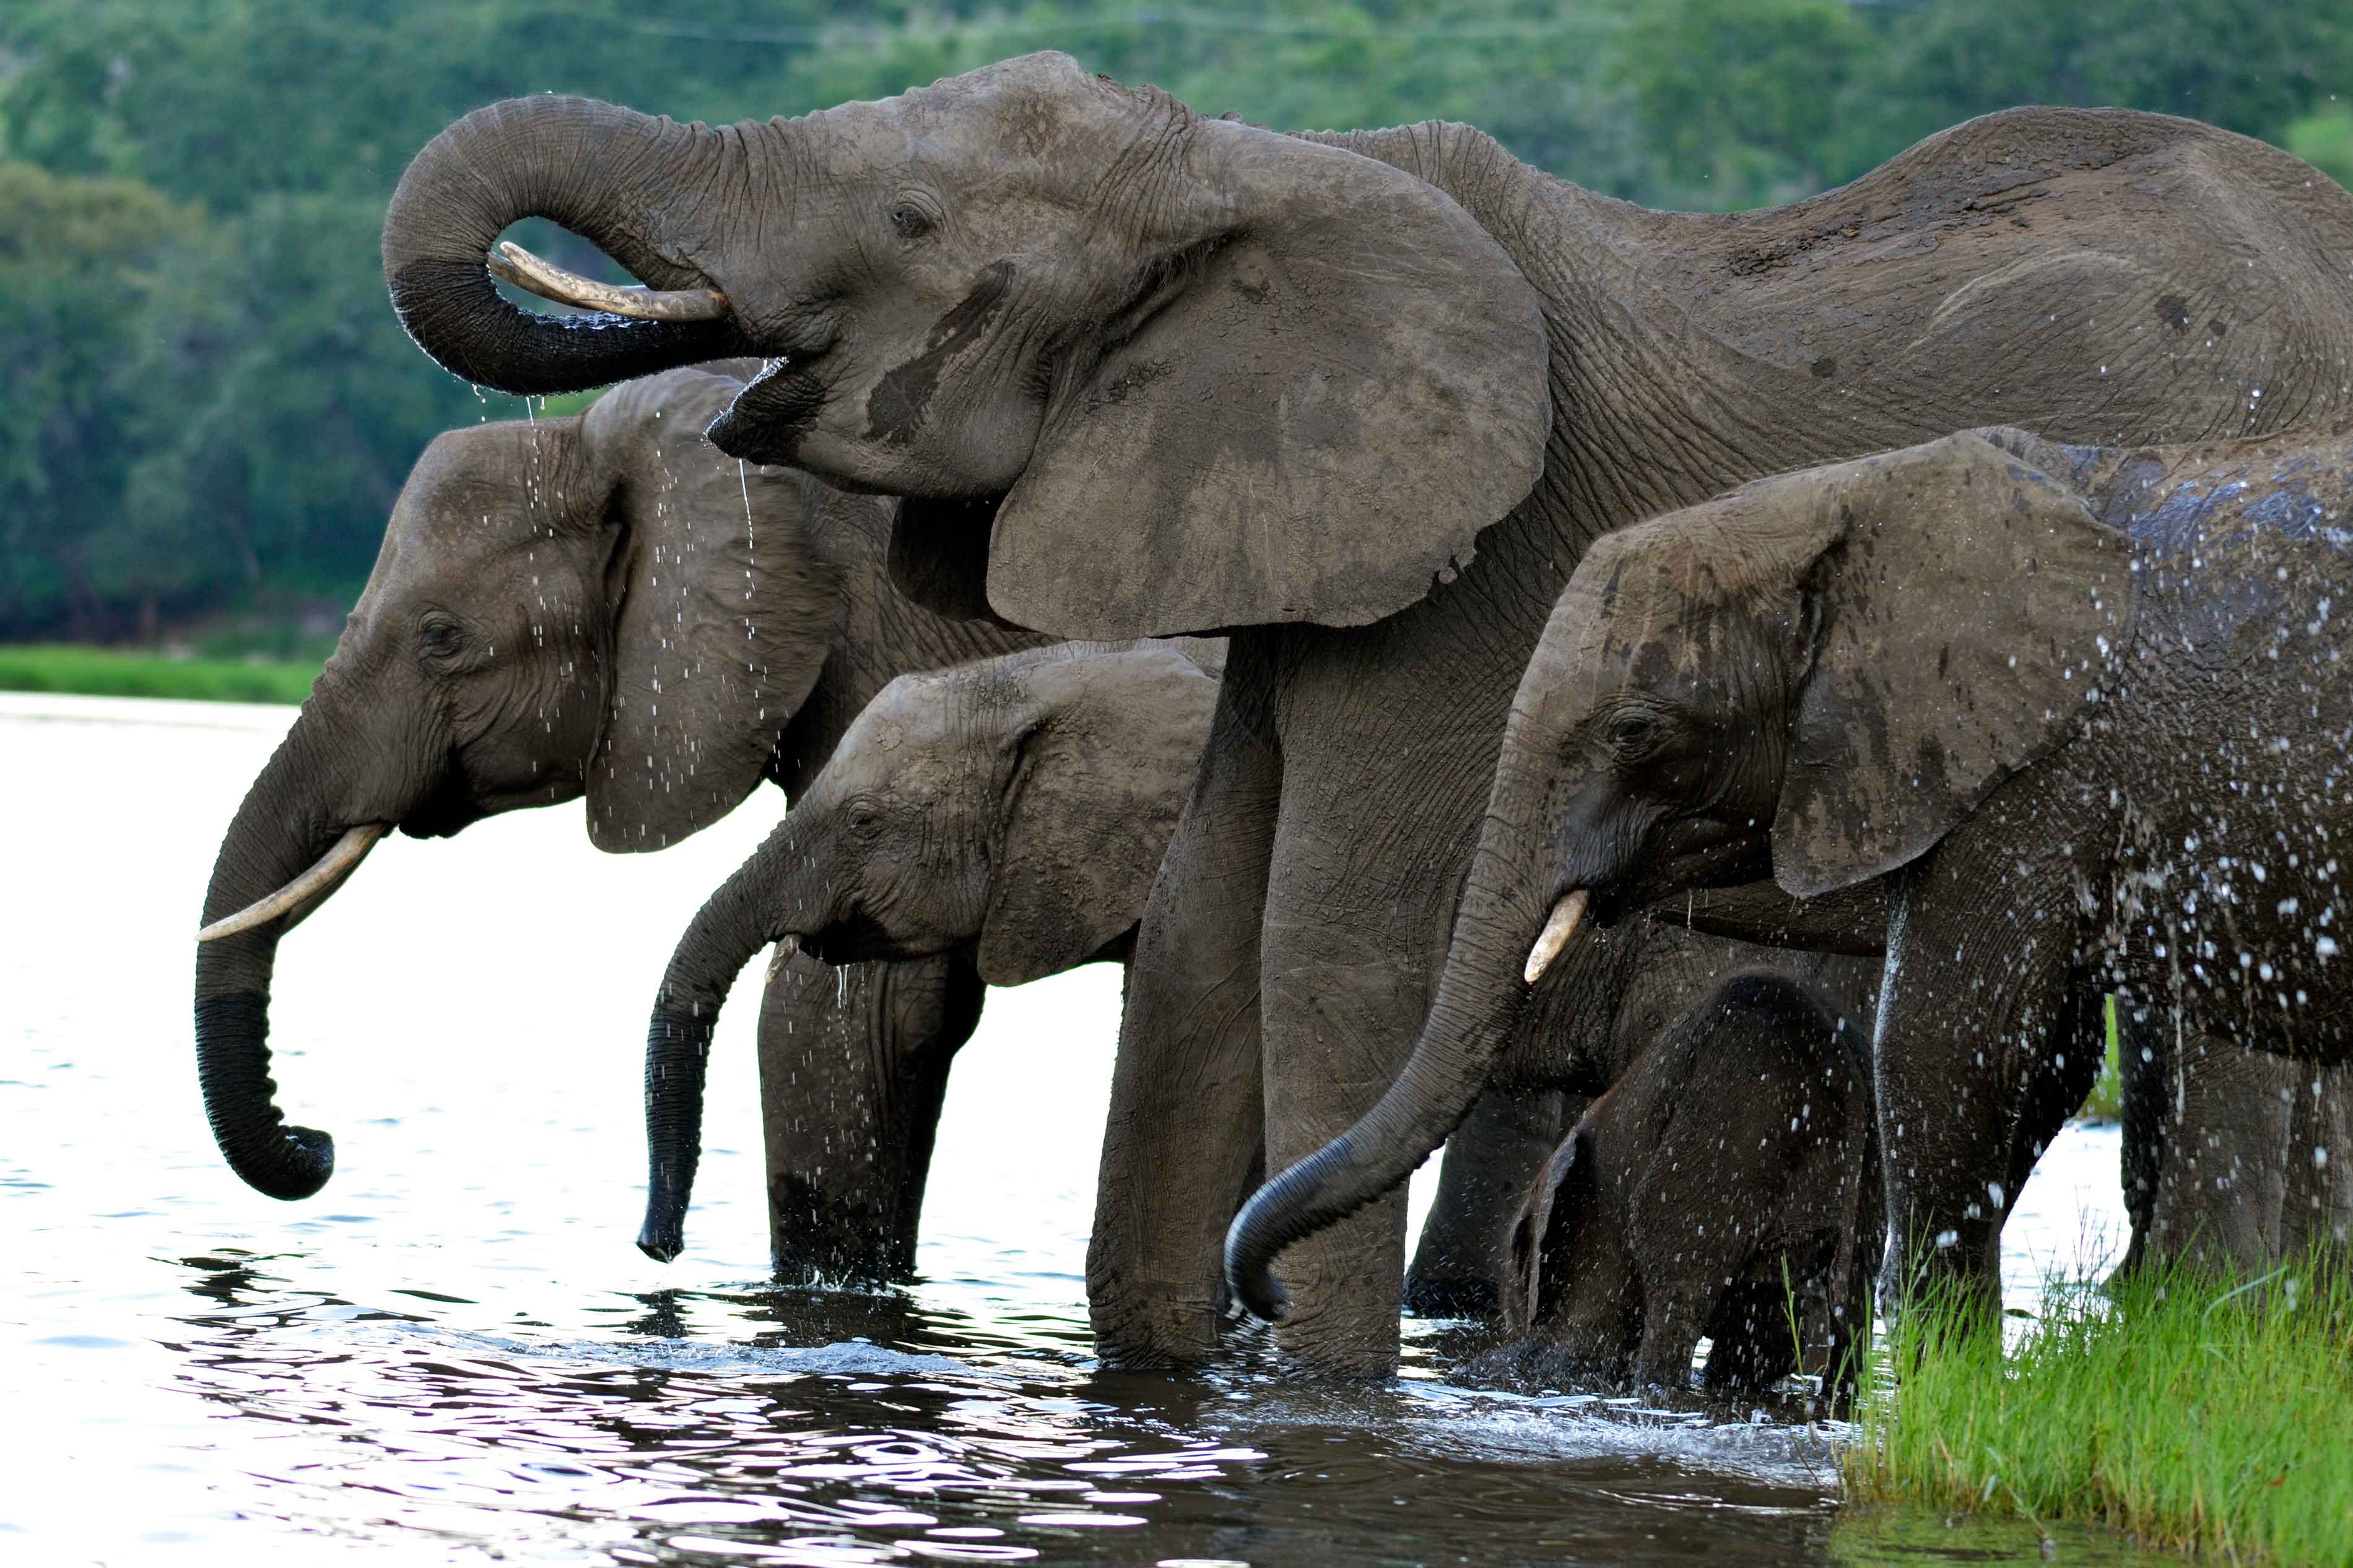 Elephants drinking and splashing water.